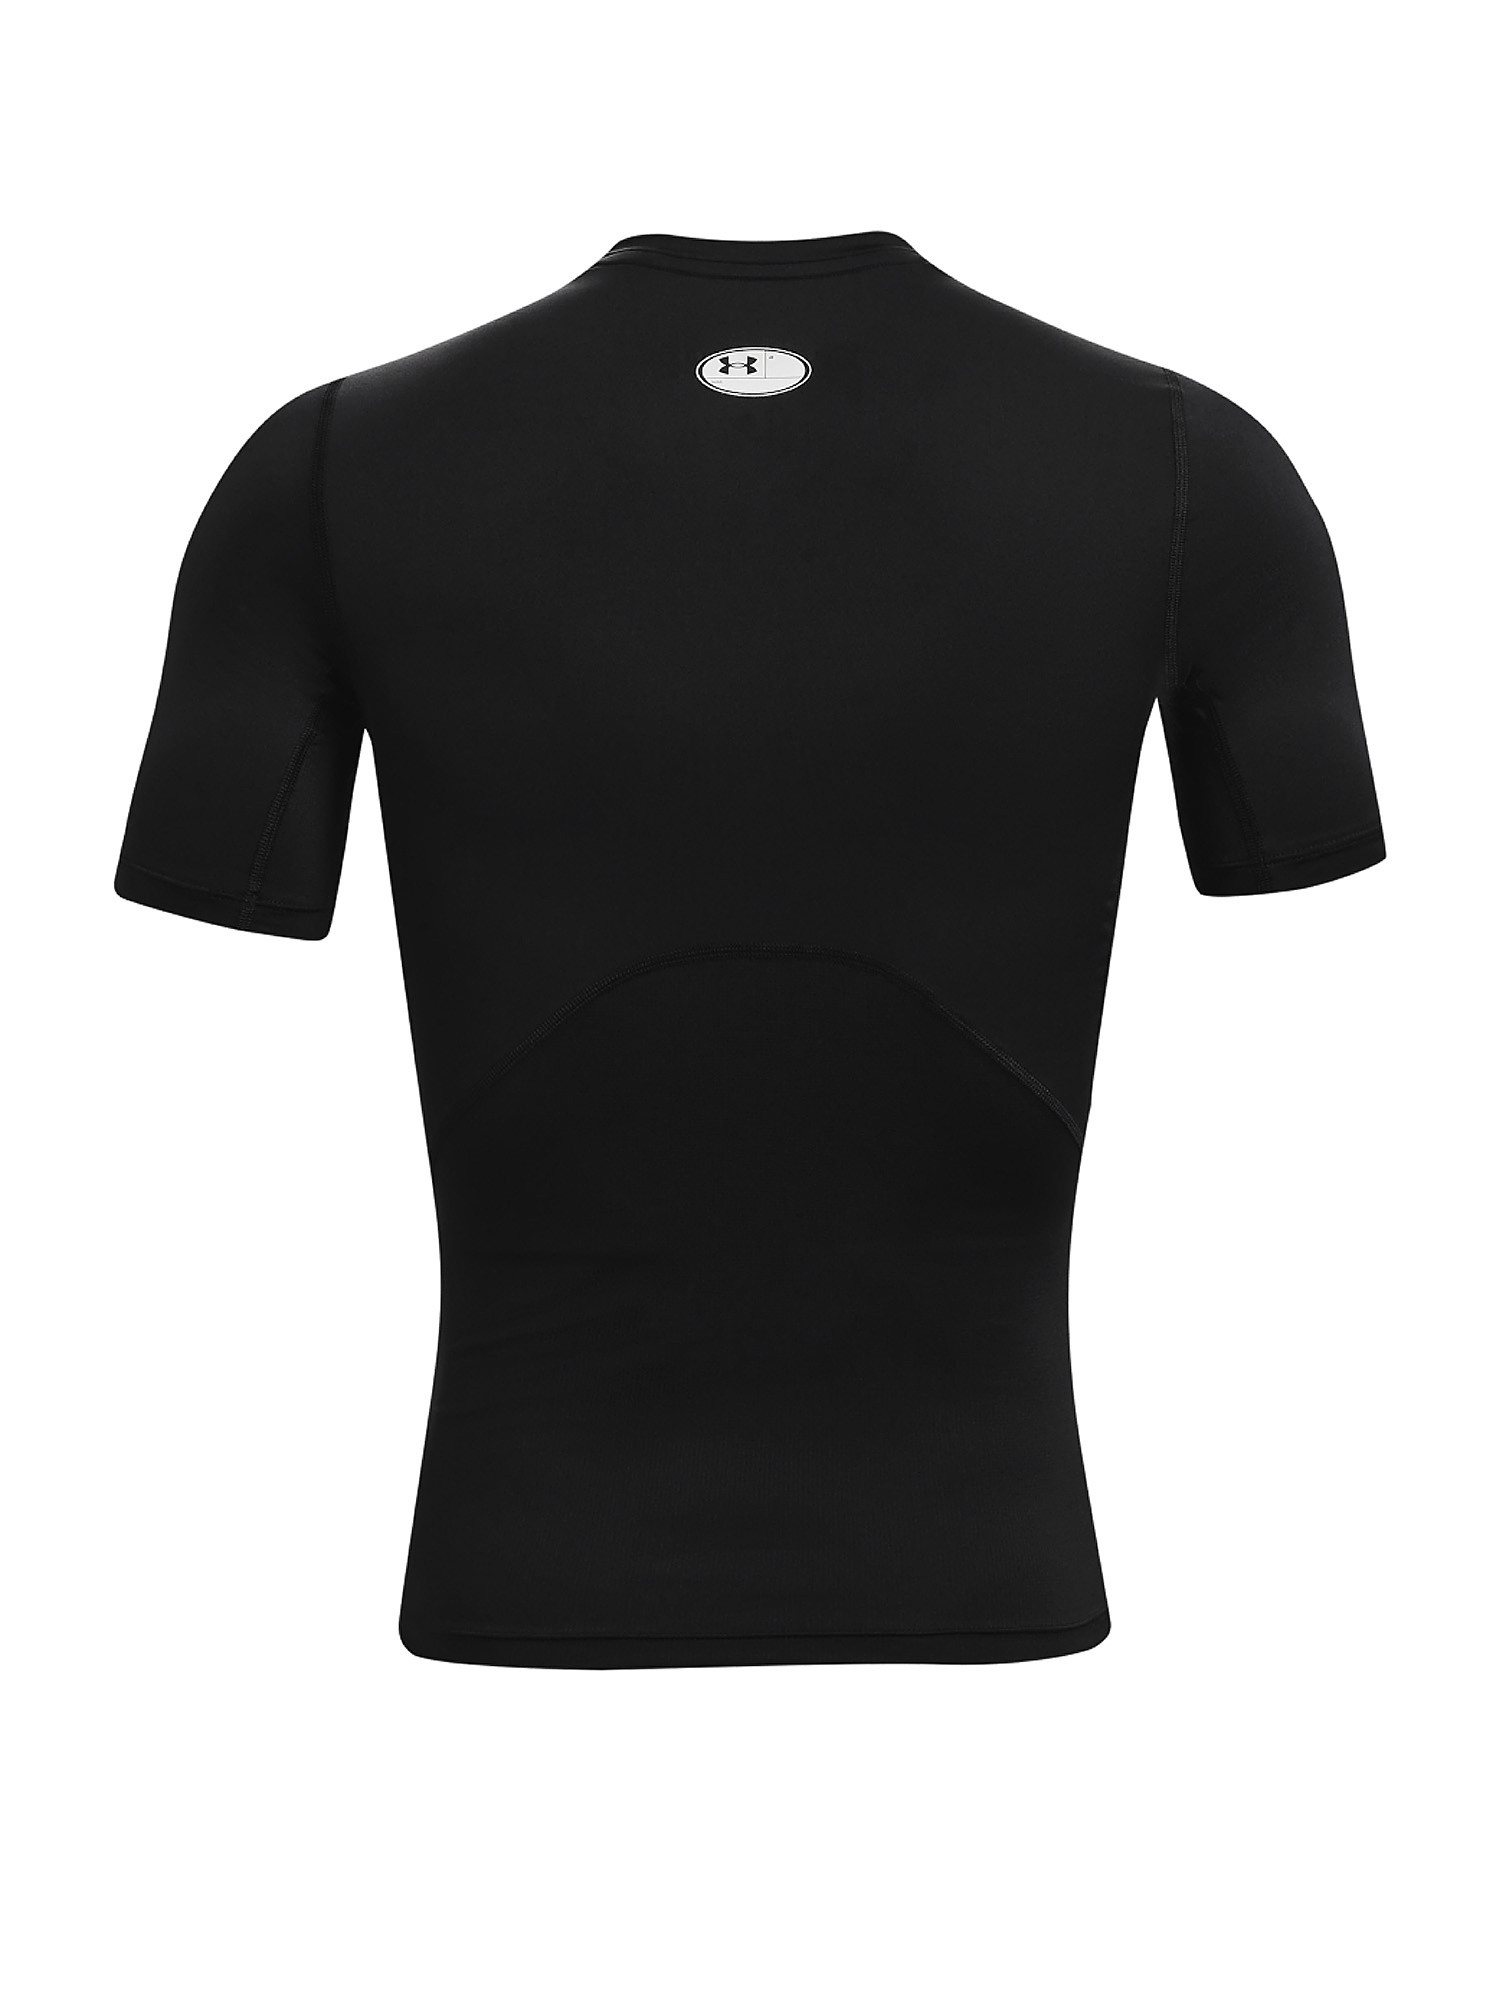 Under Armour - HeatGear® Armor Short Sleeve Jersey, Black, large image number 1